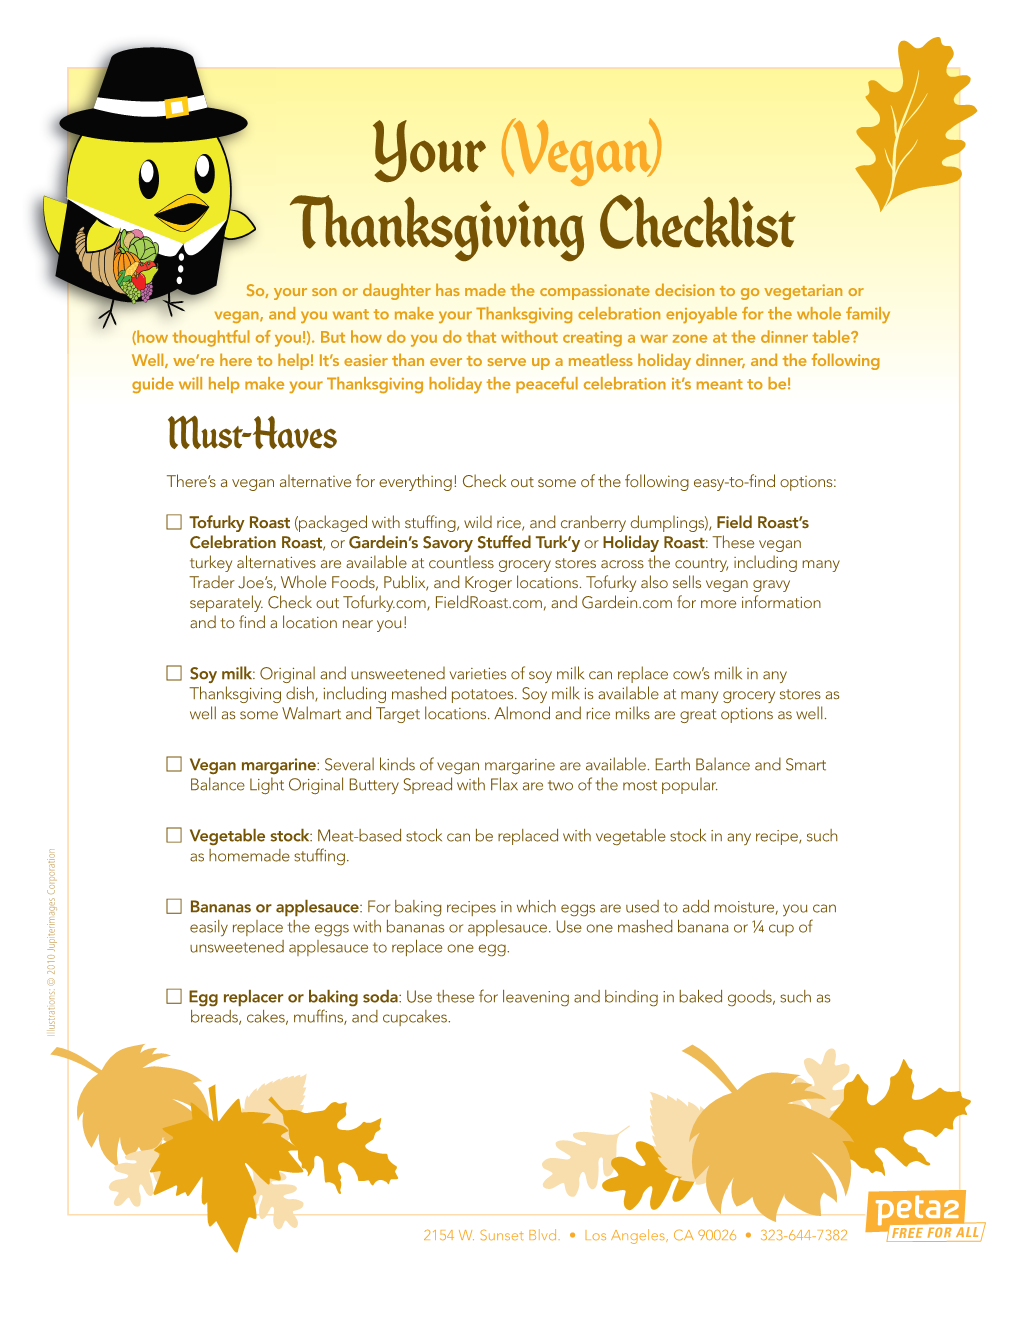 Your (Vegan) Thanksgiving Checklist